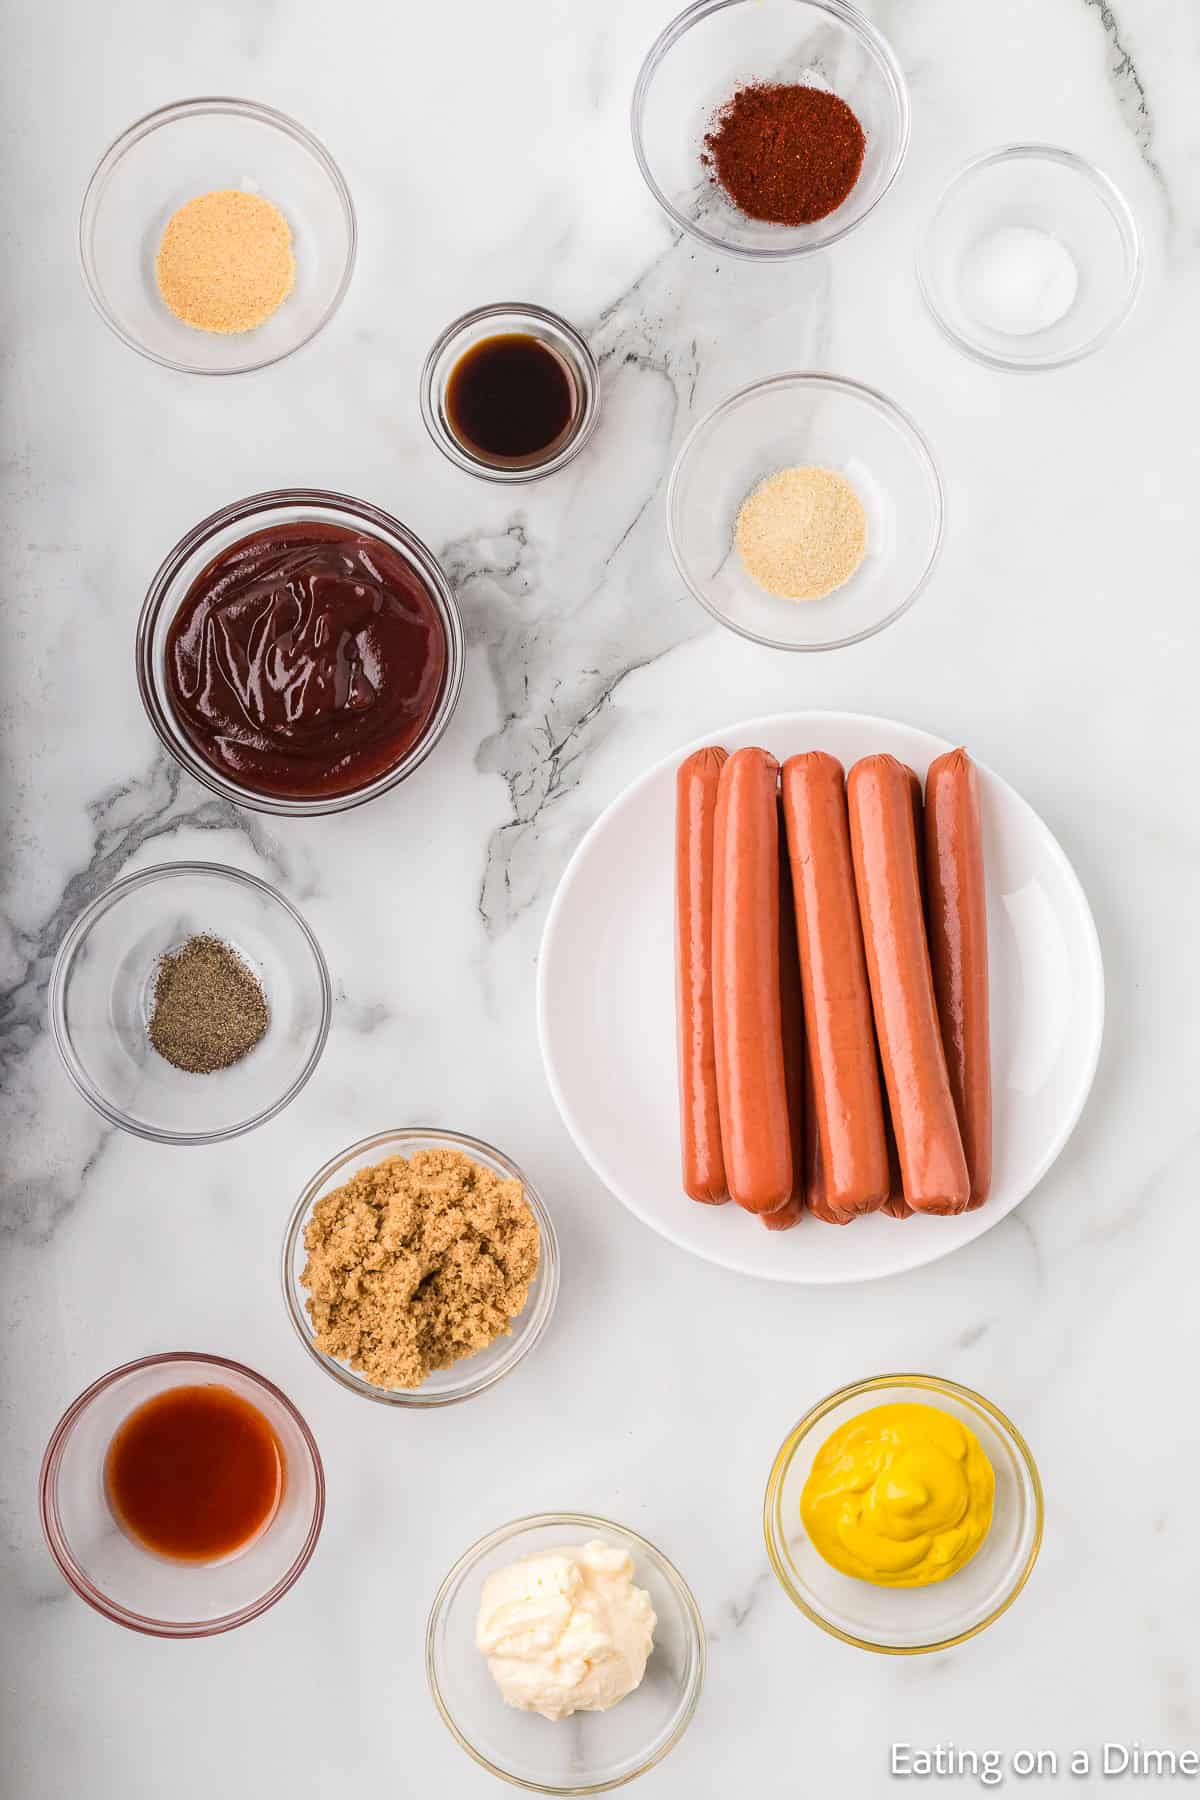 Ingredients - Hot dogs, yellow mustard, mayonnaise, smoked paprika, garlic powder, onion powder, salt, pepper, BBQ sauce, brown sugar, worcestershire sauce, hot sauce